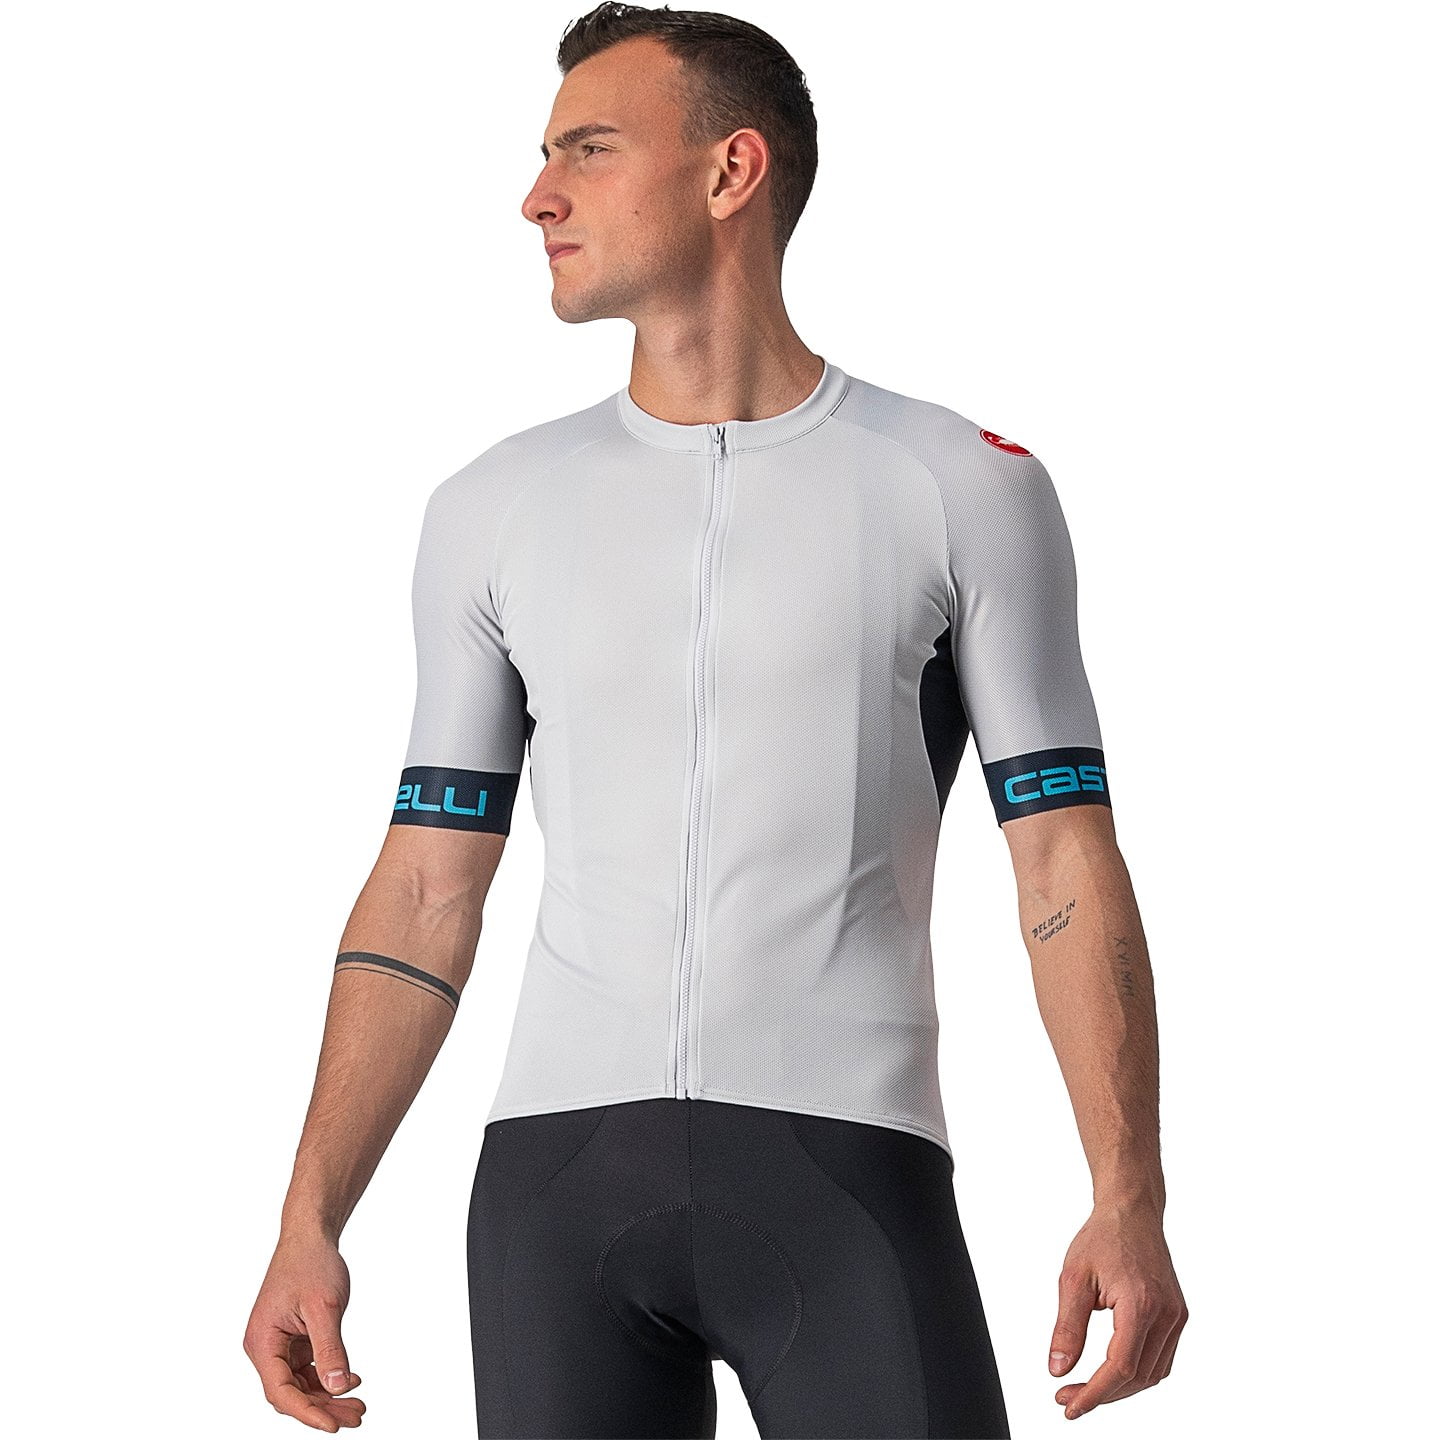 CASTELLI Entrata VI Short Sleeve Jersey Short Sleeve Jersey, for men, size XL, Cycling jersey, Cycle clothing